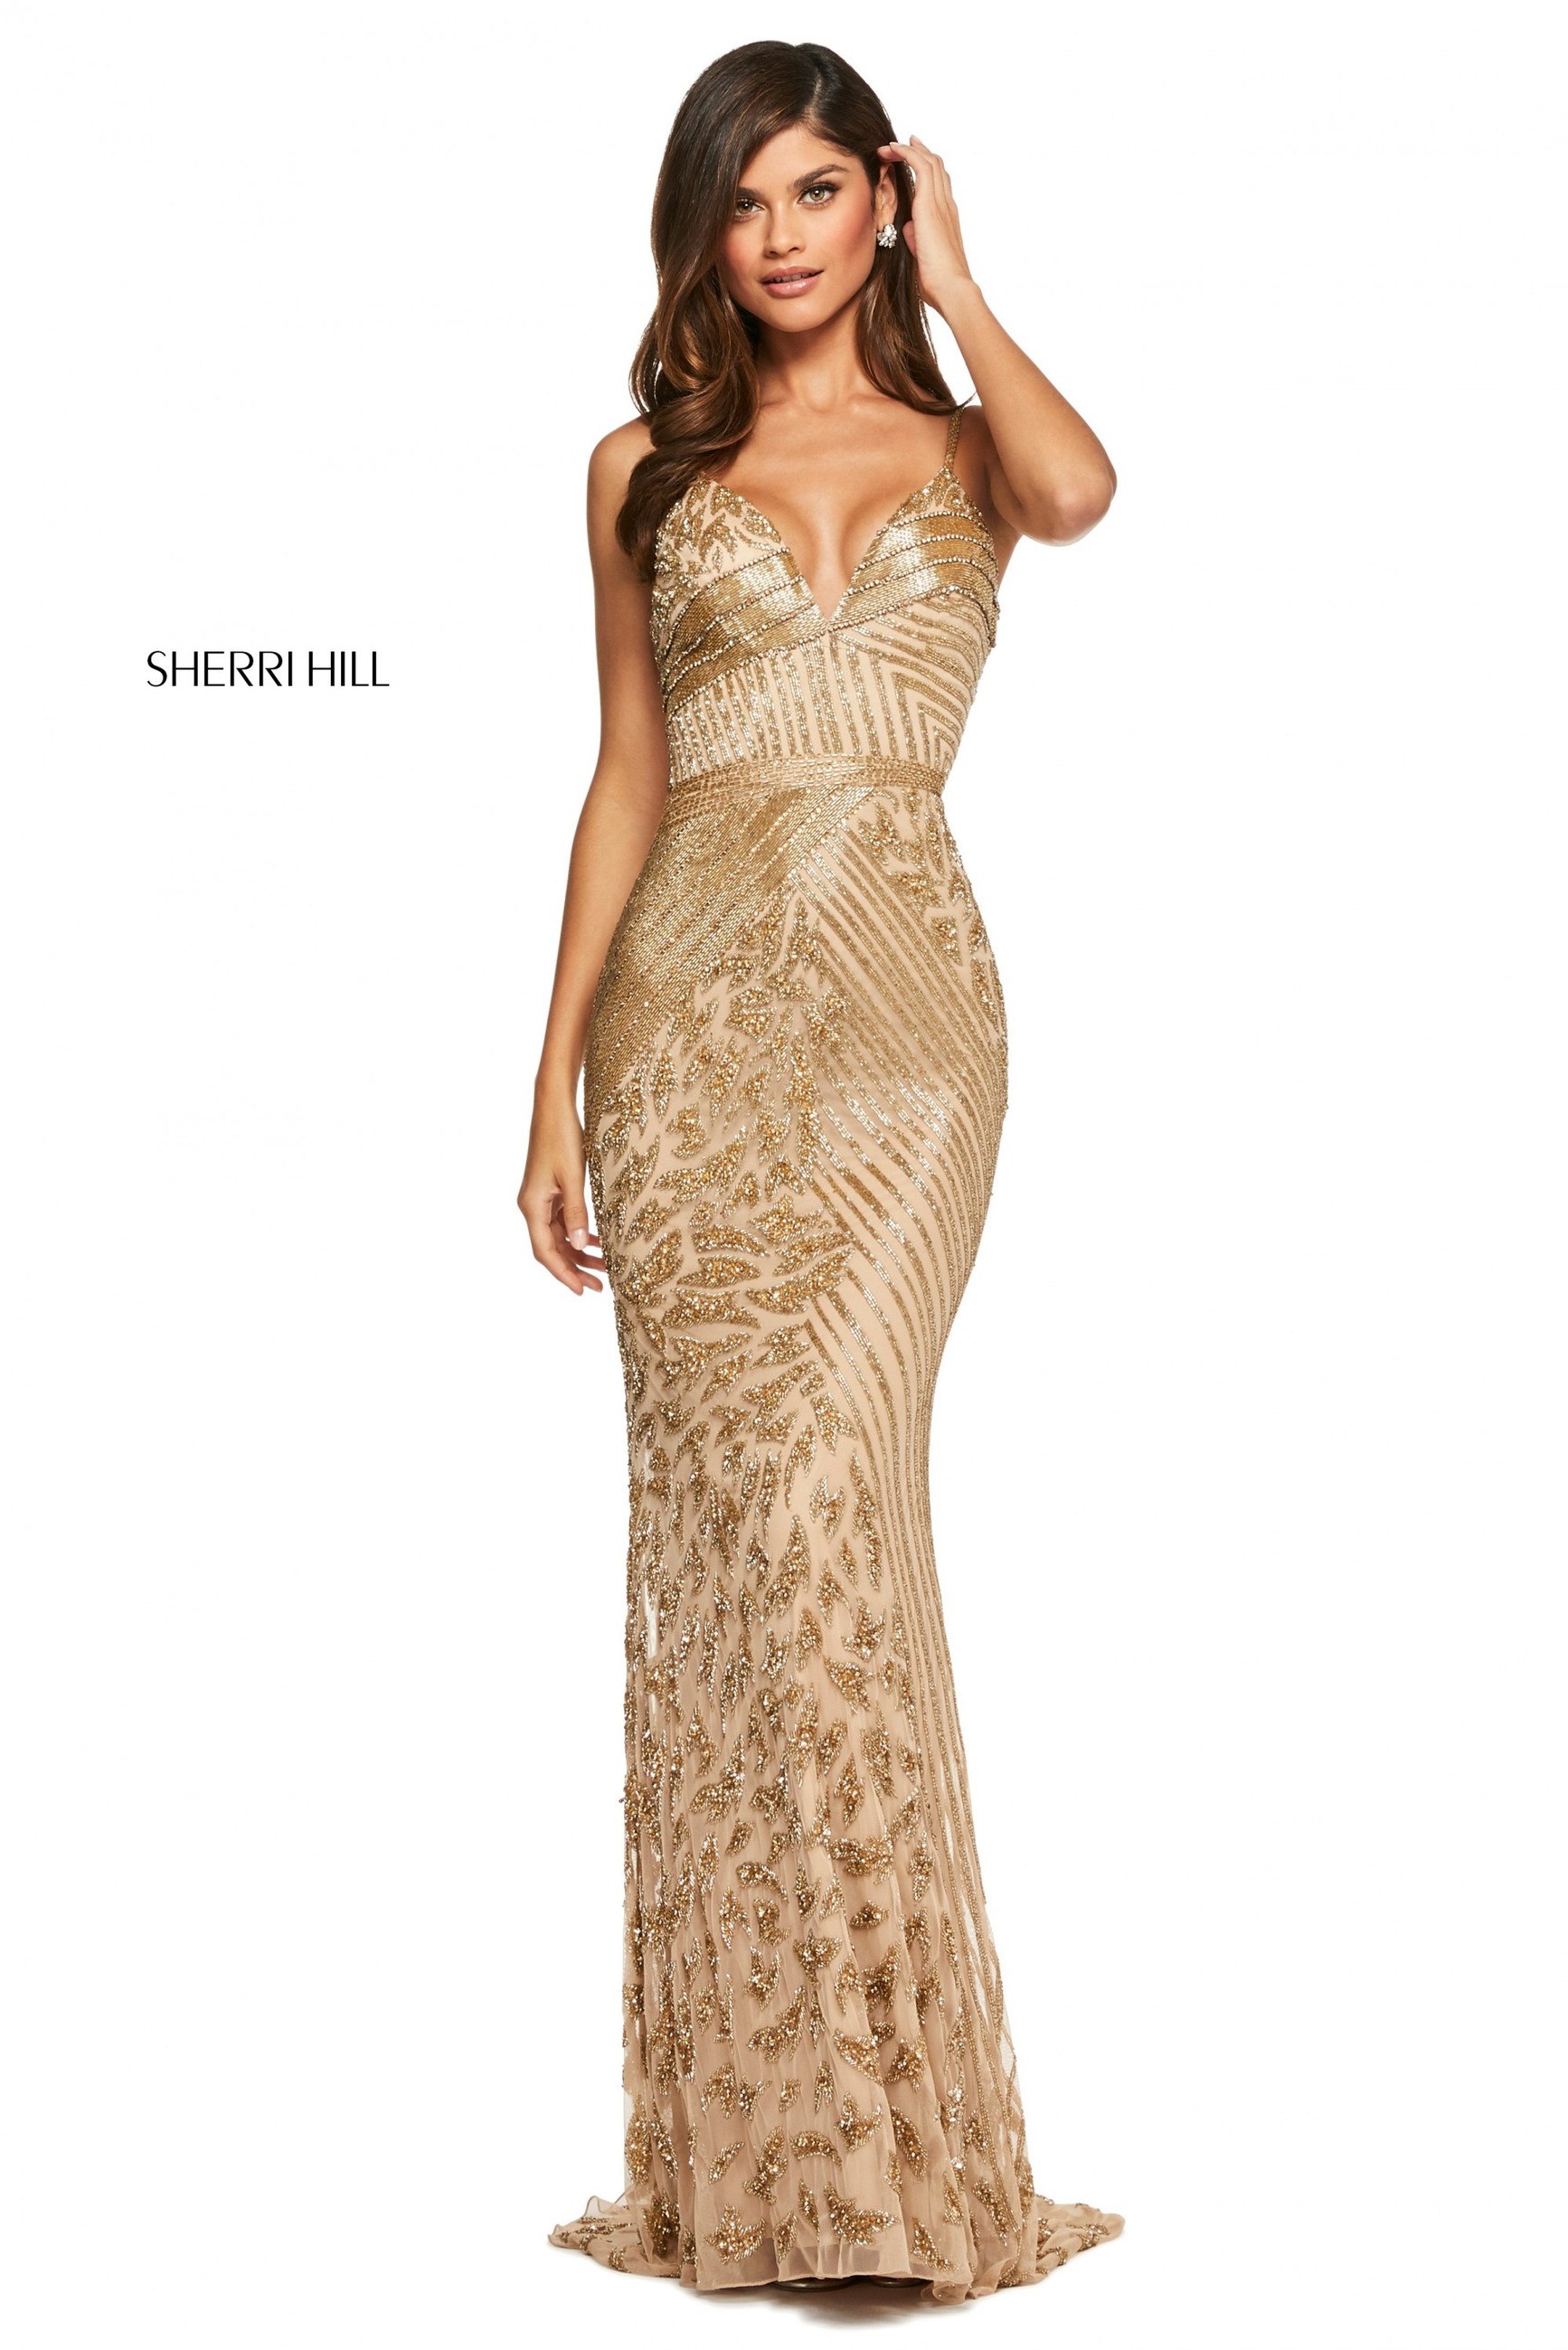 Model wearing a gold Sherri Hill prom dress